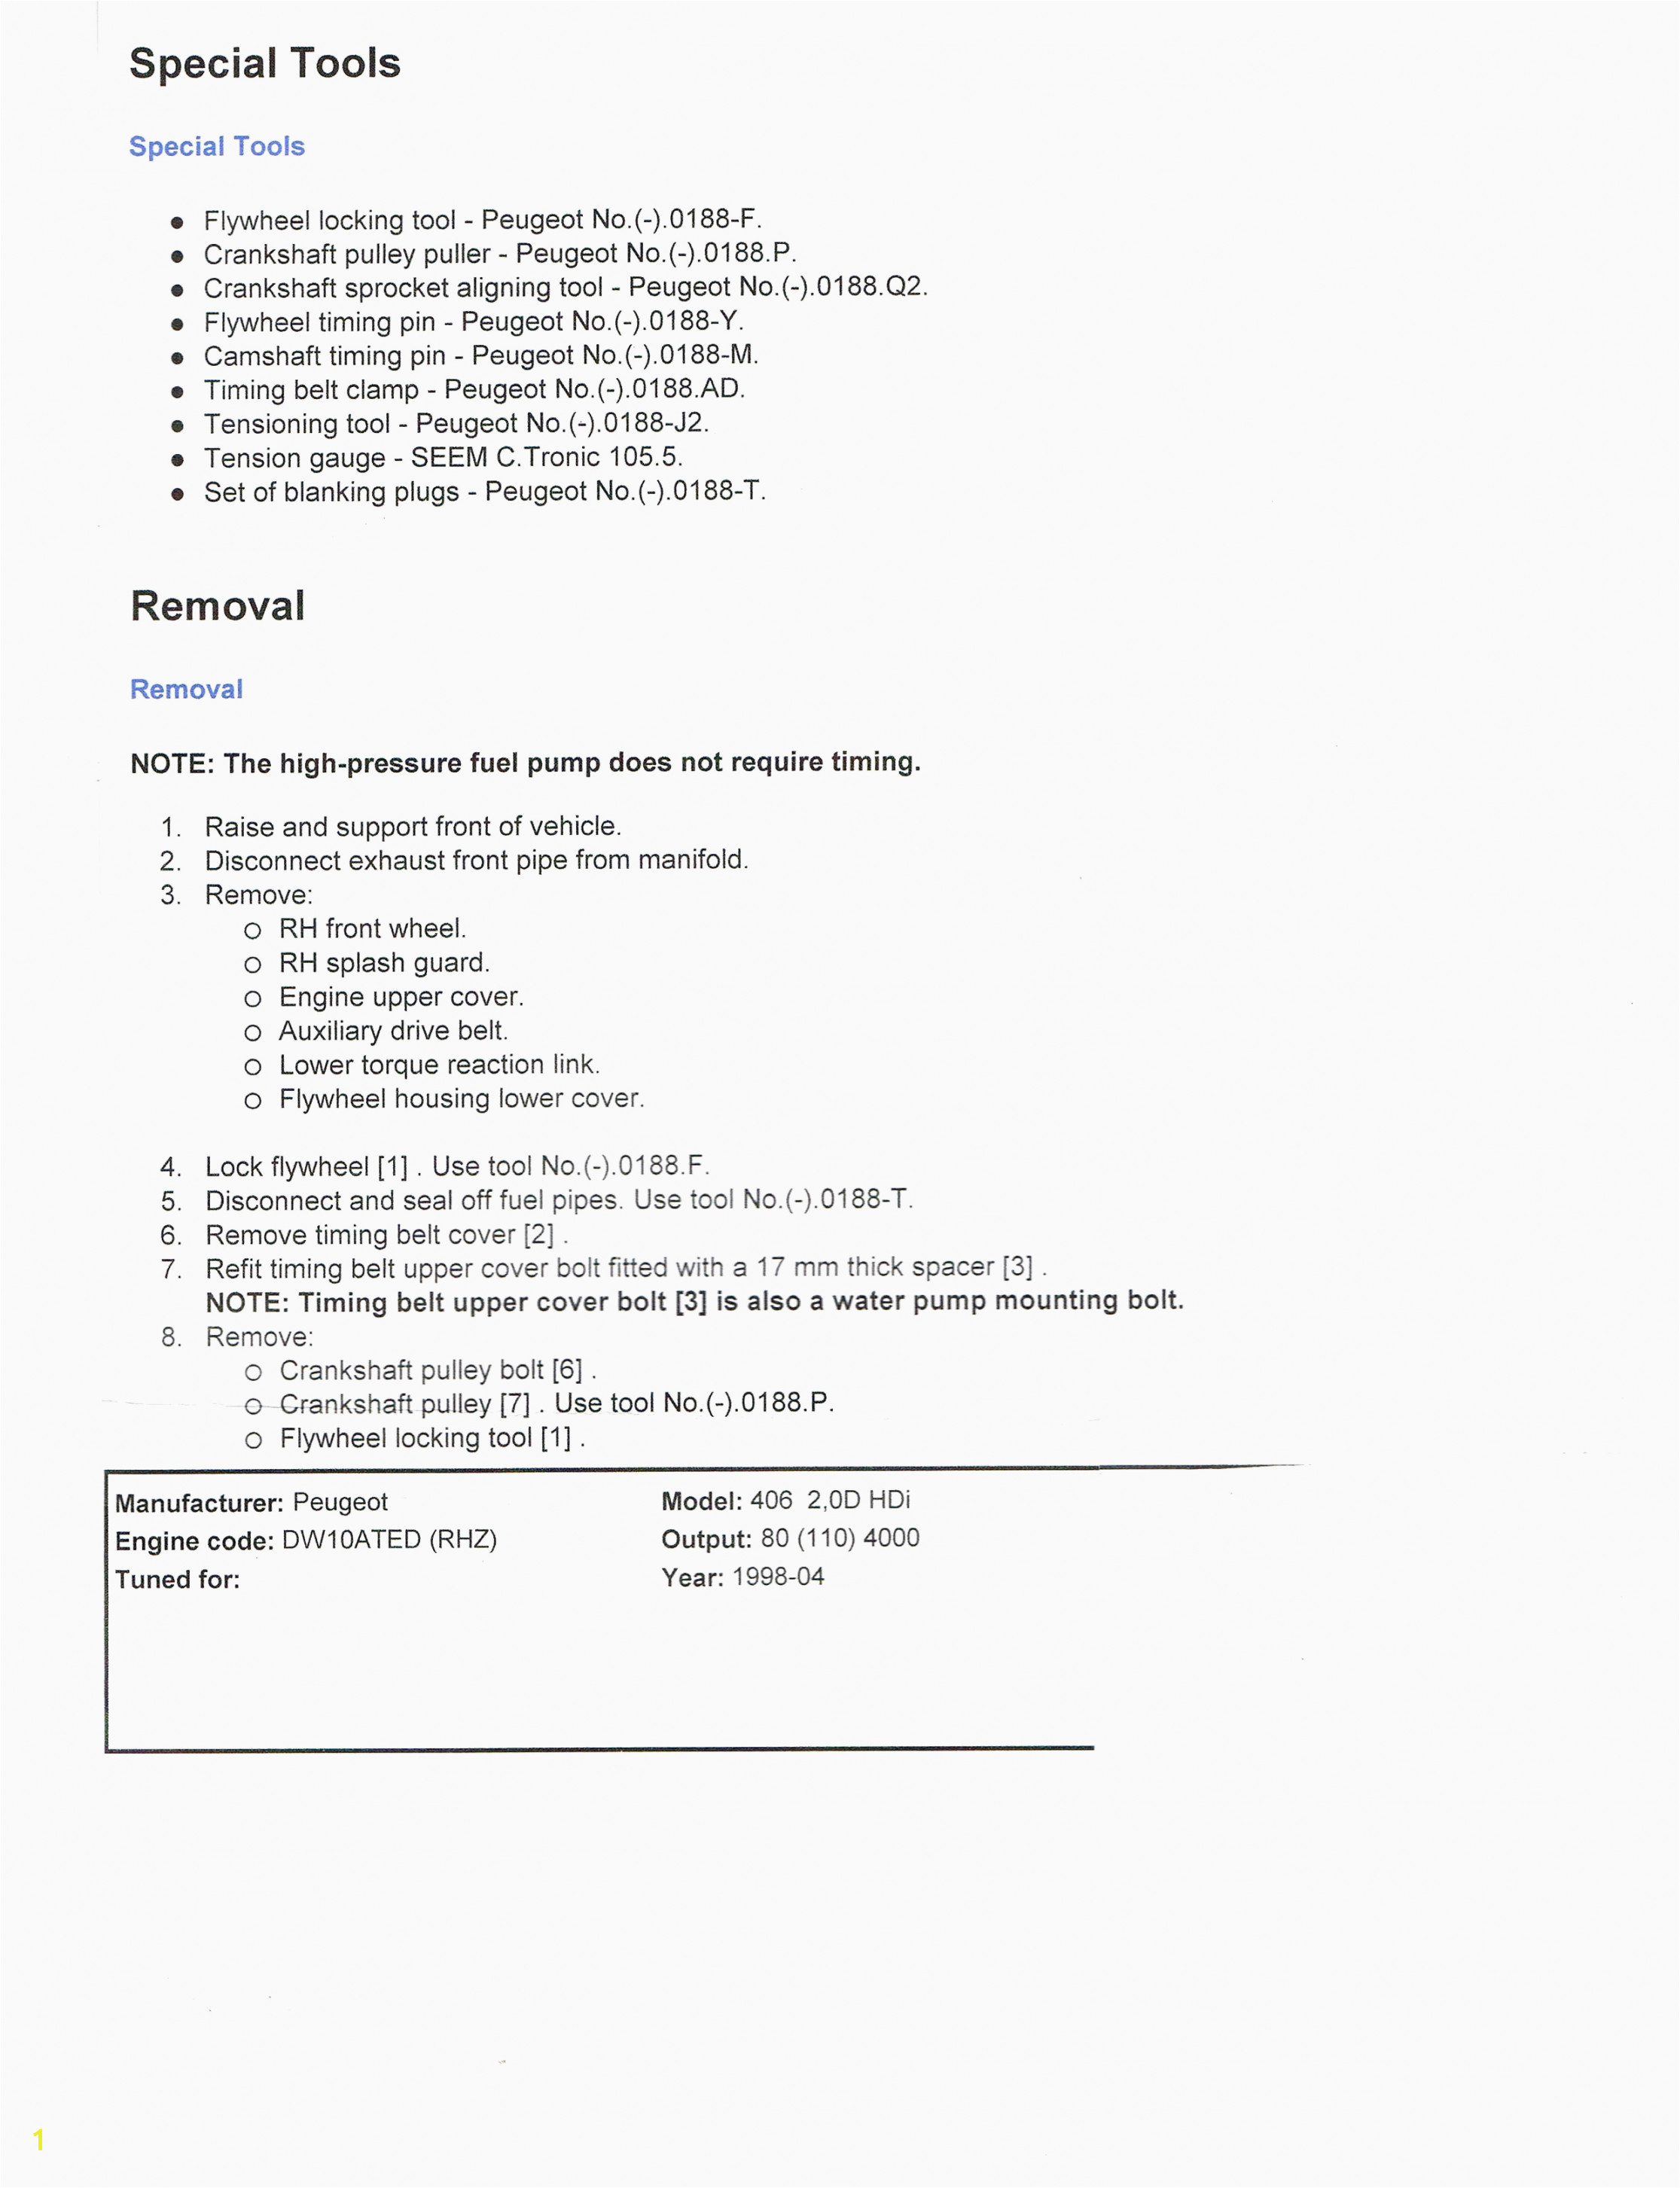 Blank Leaf Template Unique Basic Resume formats Unique Resume Blank